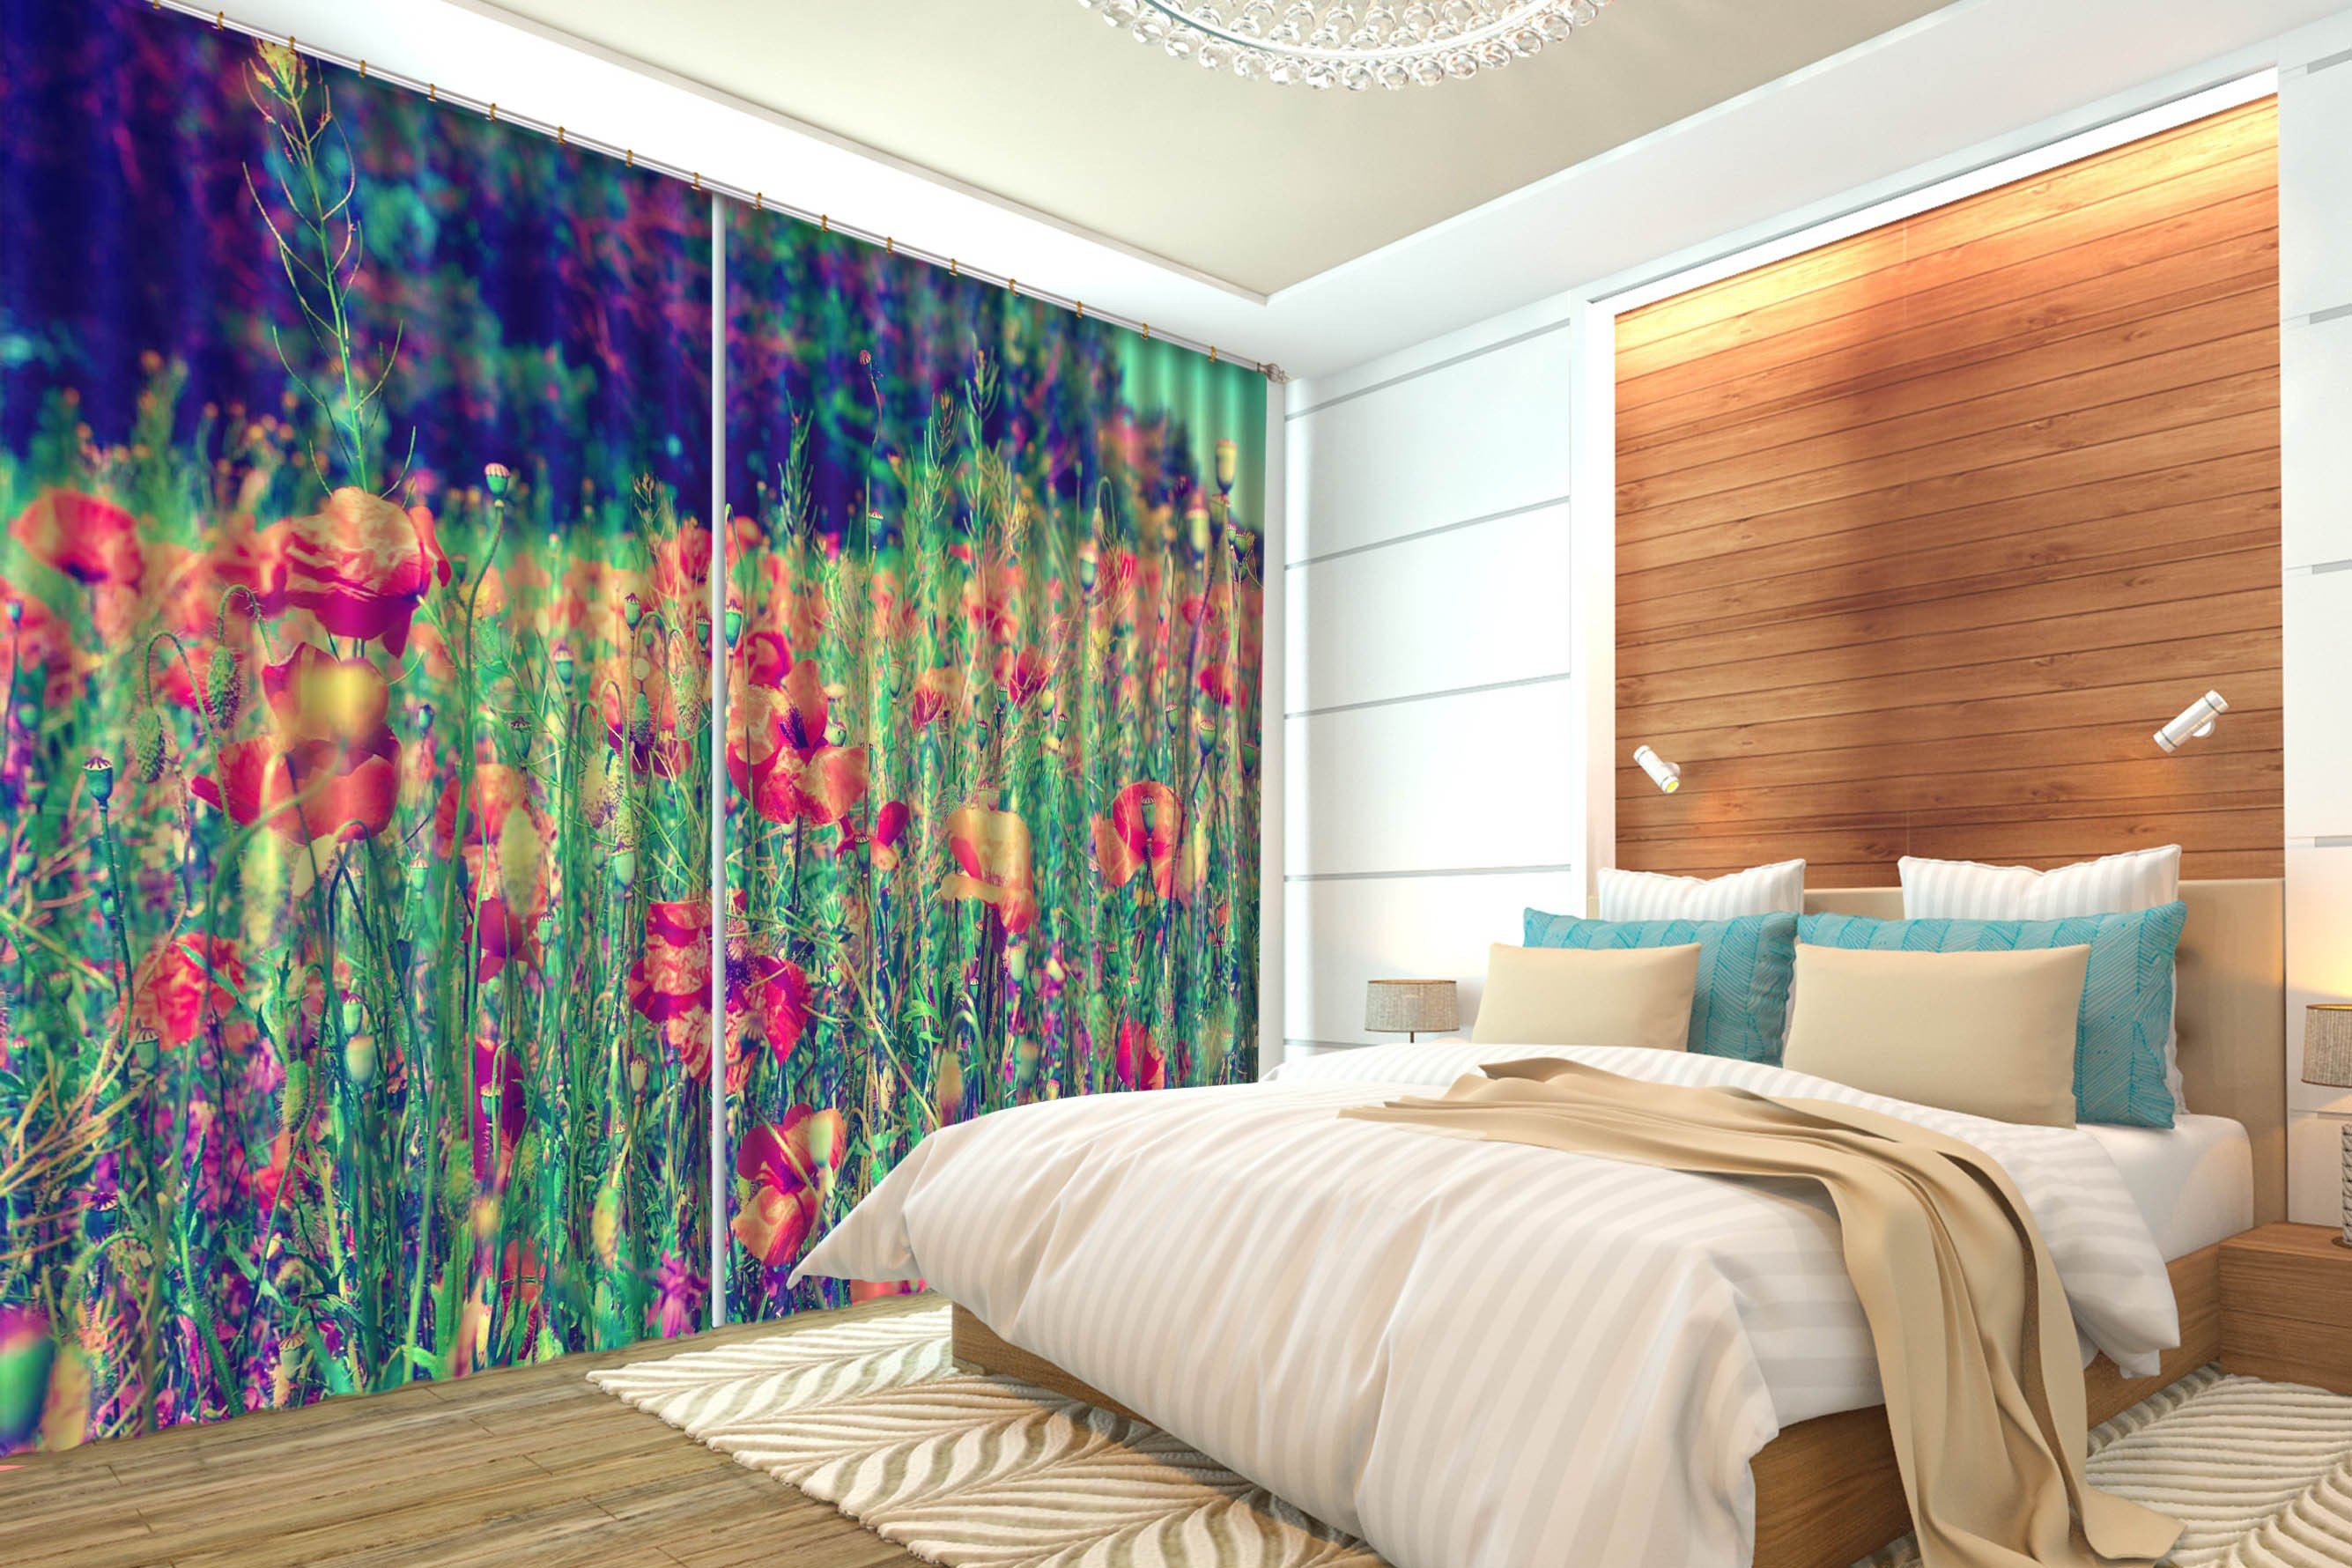 3D Lush Flowers 638 Curtains Drapes Wallpaper AJ Wallpaper 